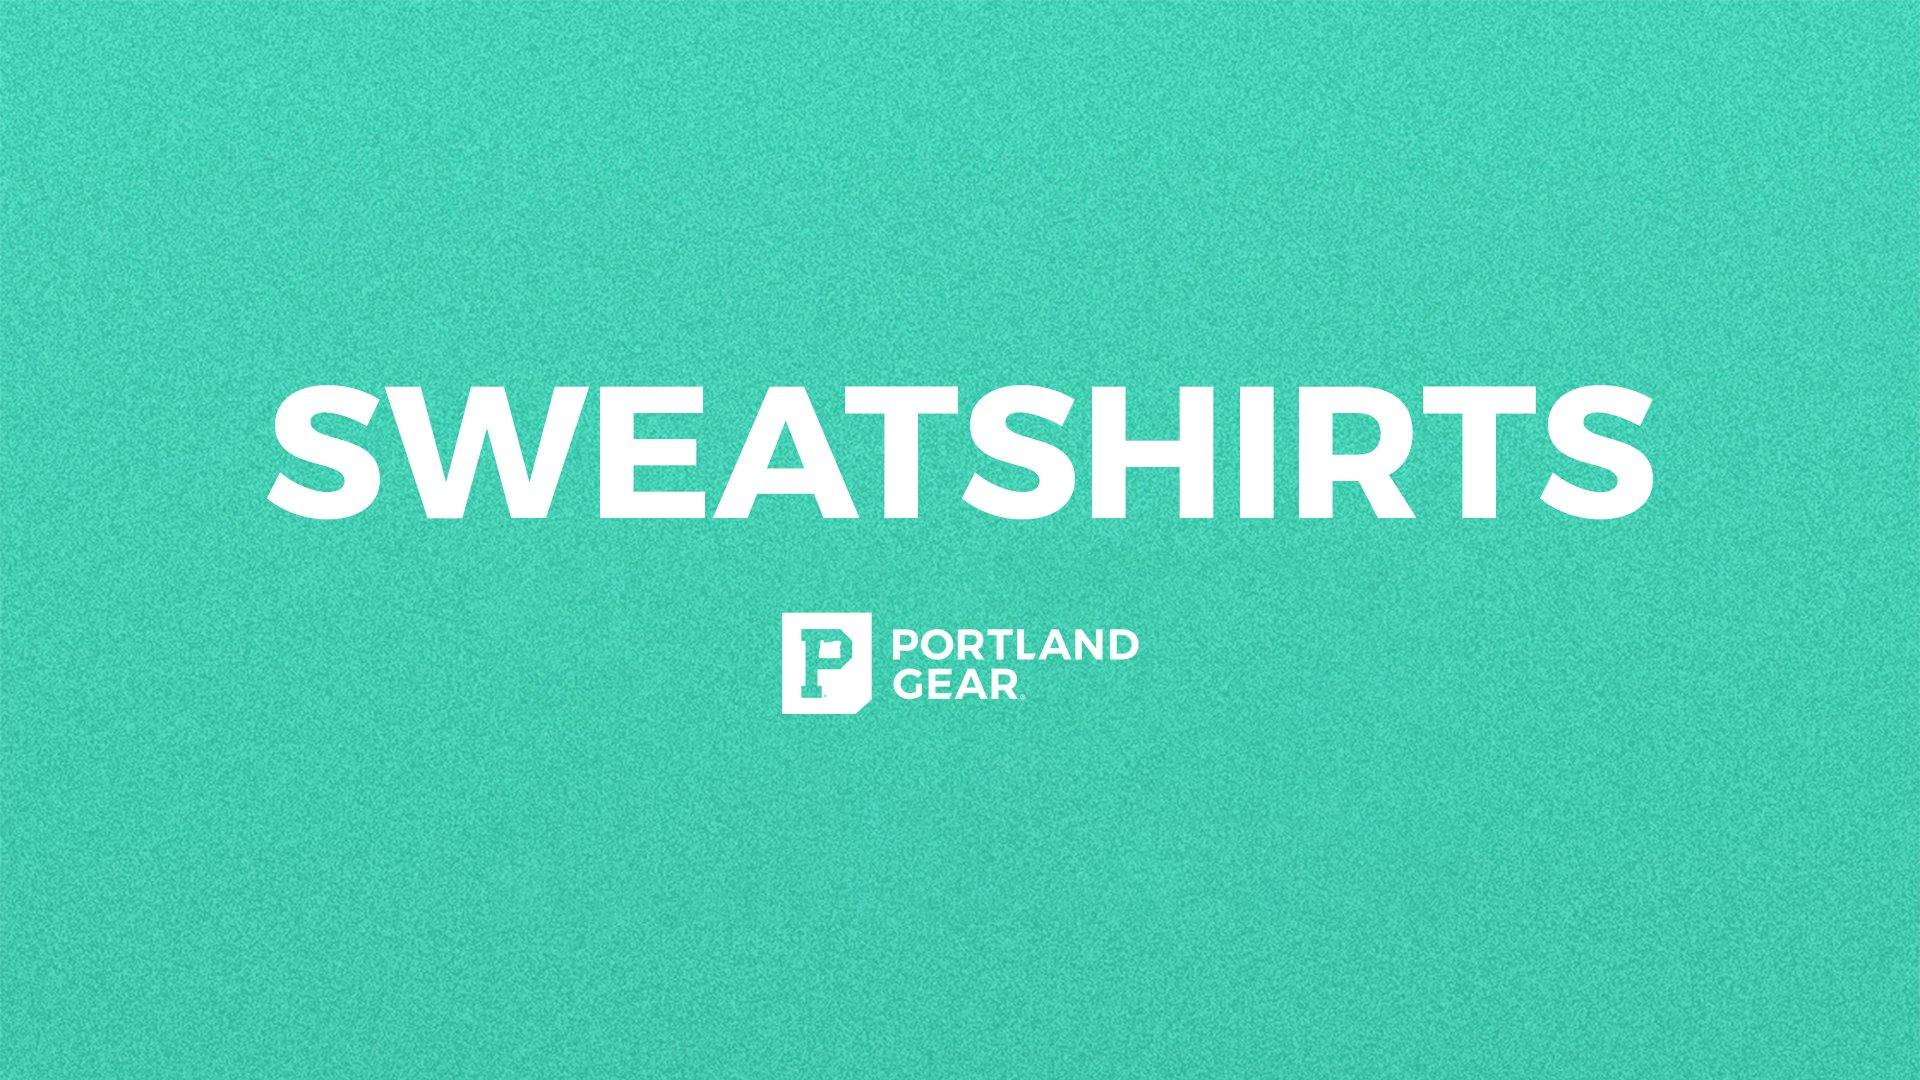 Sweatshirts - Portland Gear